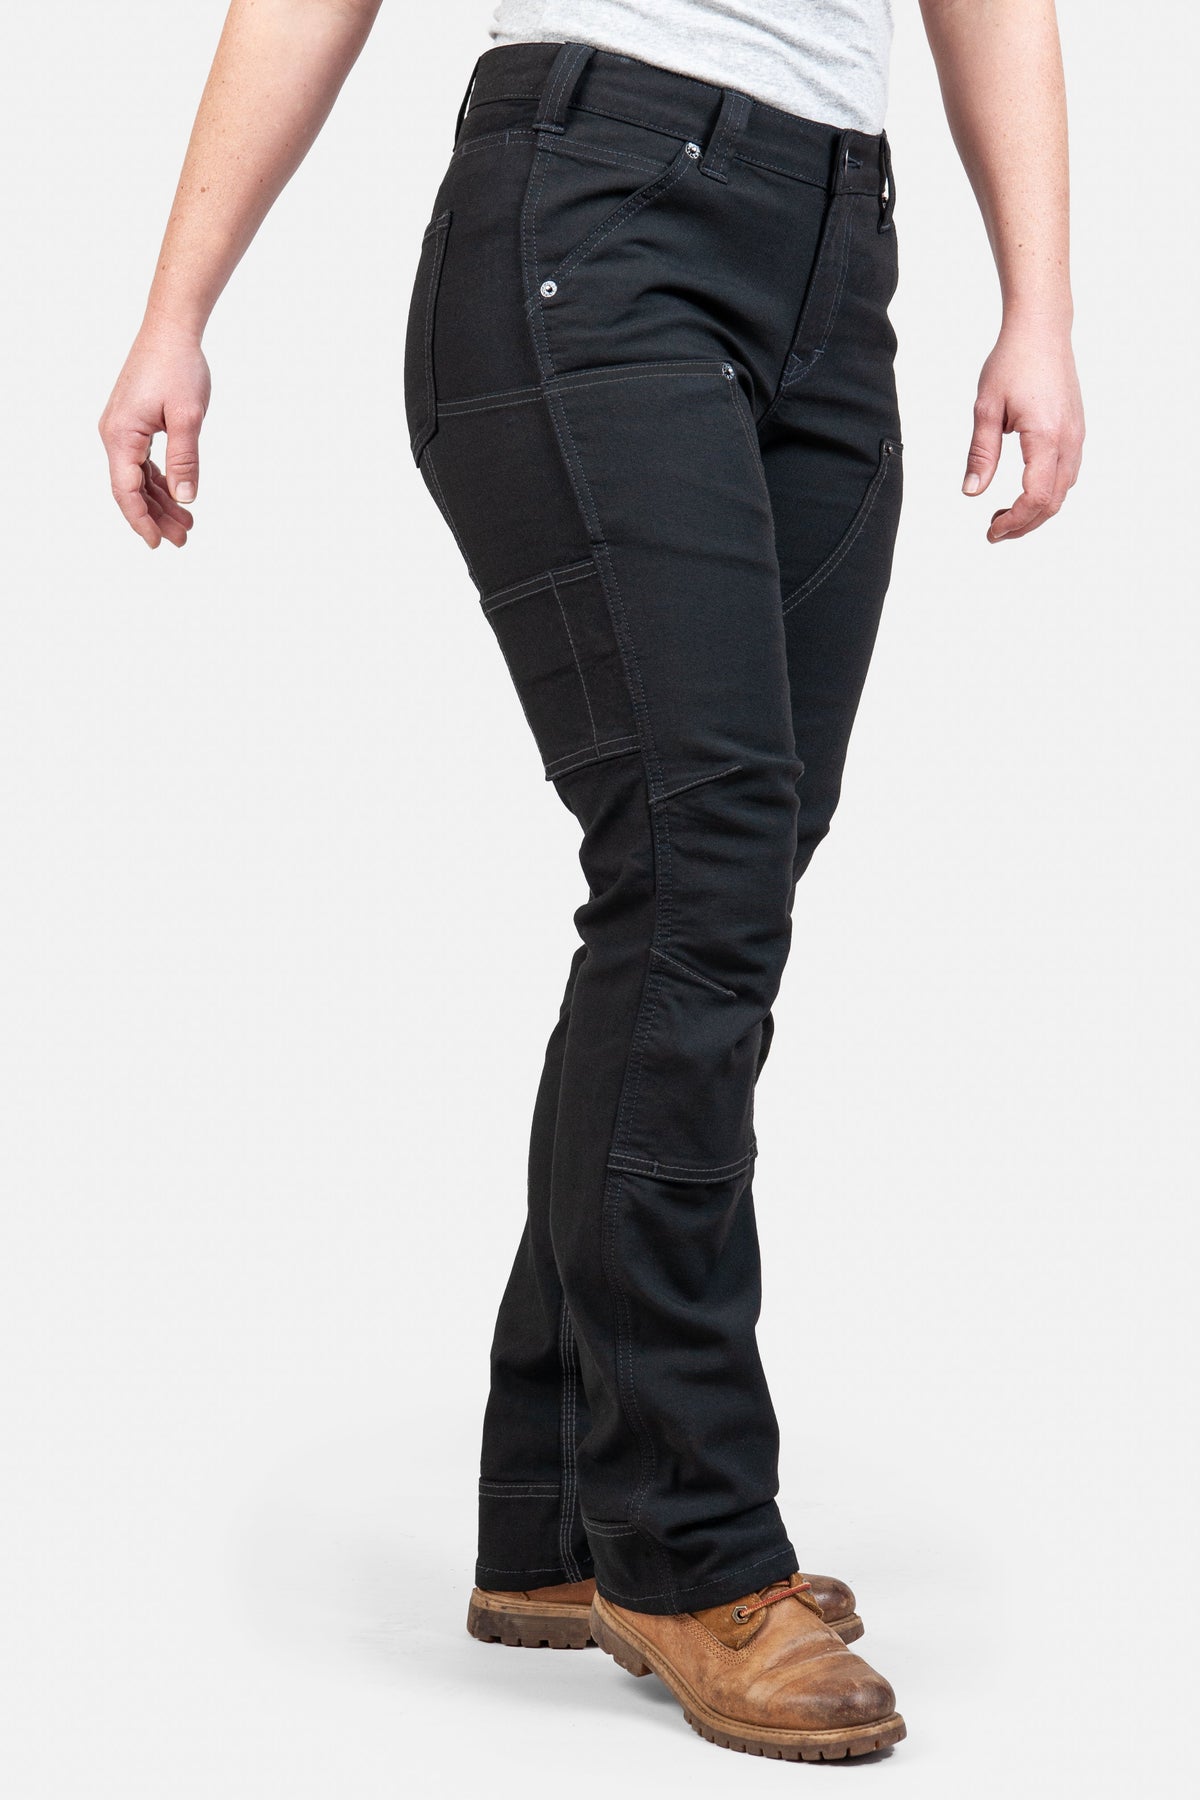 Dovetail Workwear Women&#39;s Britt Utility Stretch Pant_No Fade Canvas Black - Work World - Workwear, Work Boots, Safety Gear